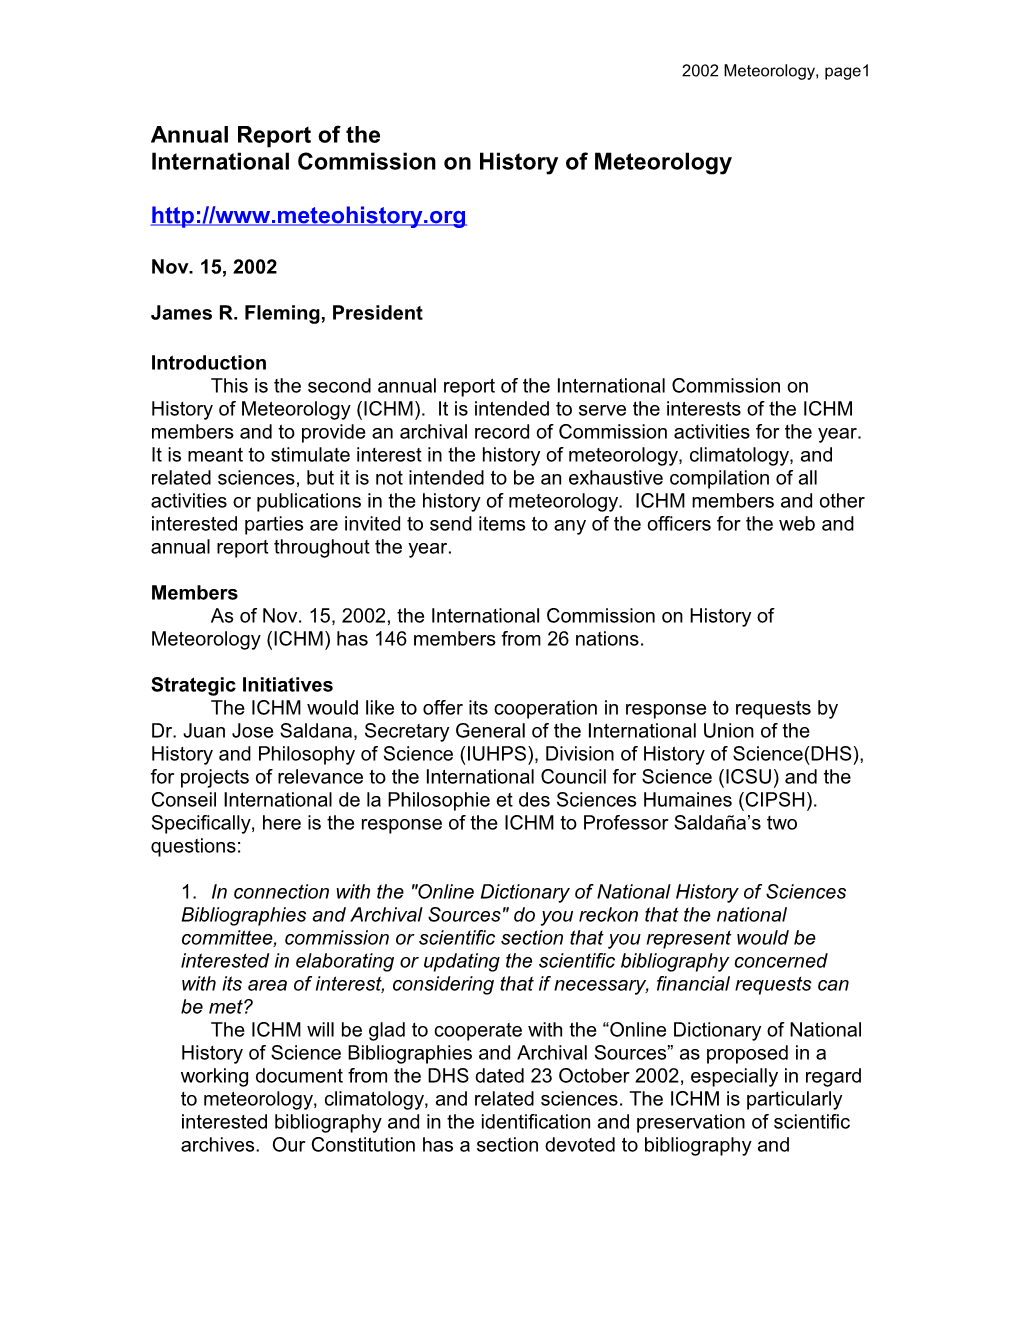 International Commission on History of Meteorology